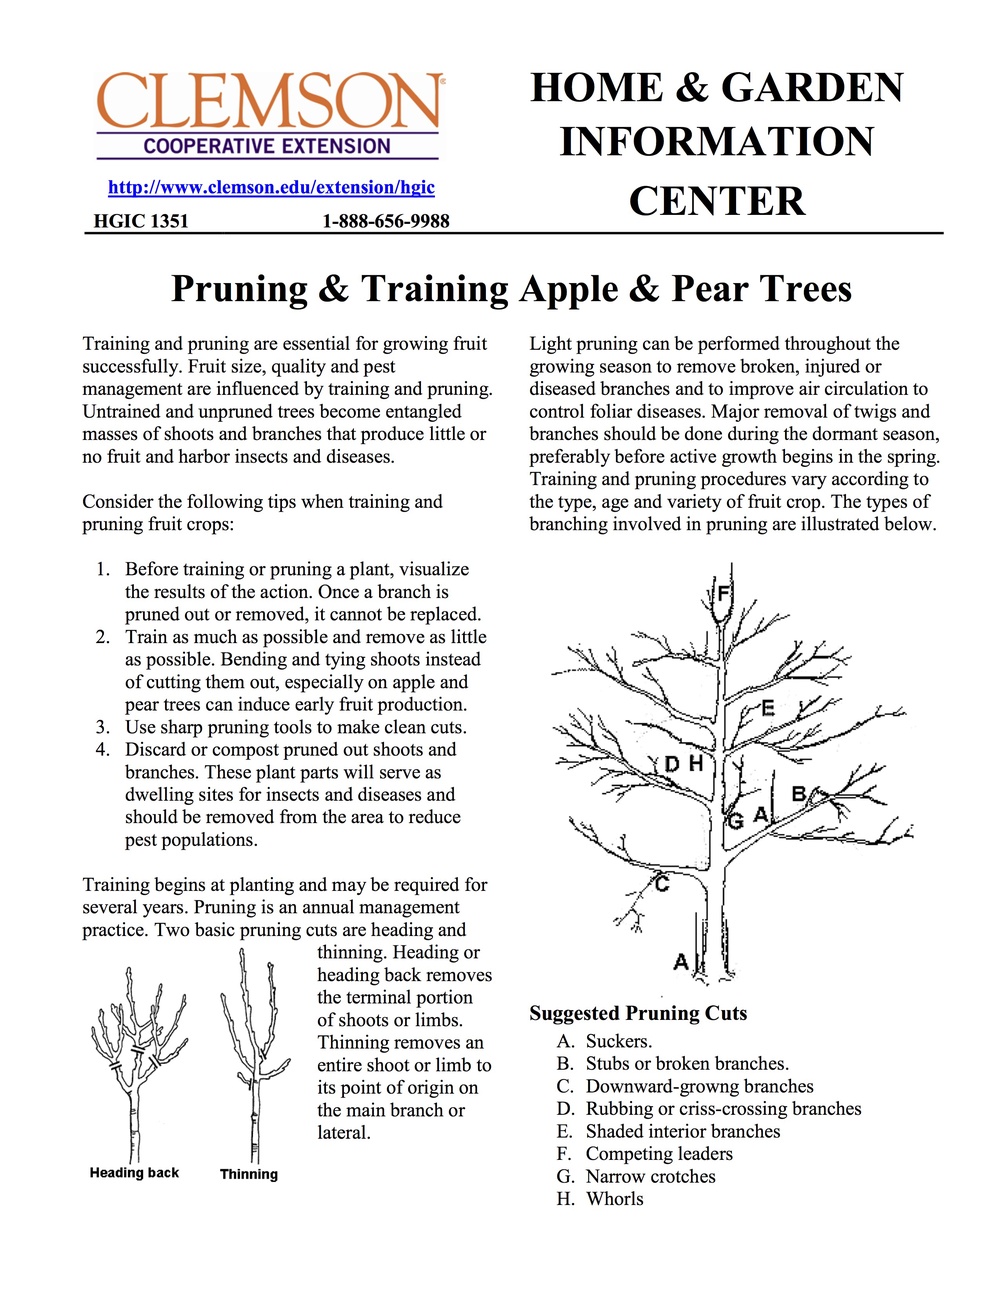 How do you brace a fruit tree branch?